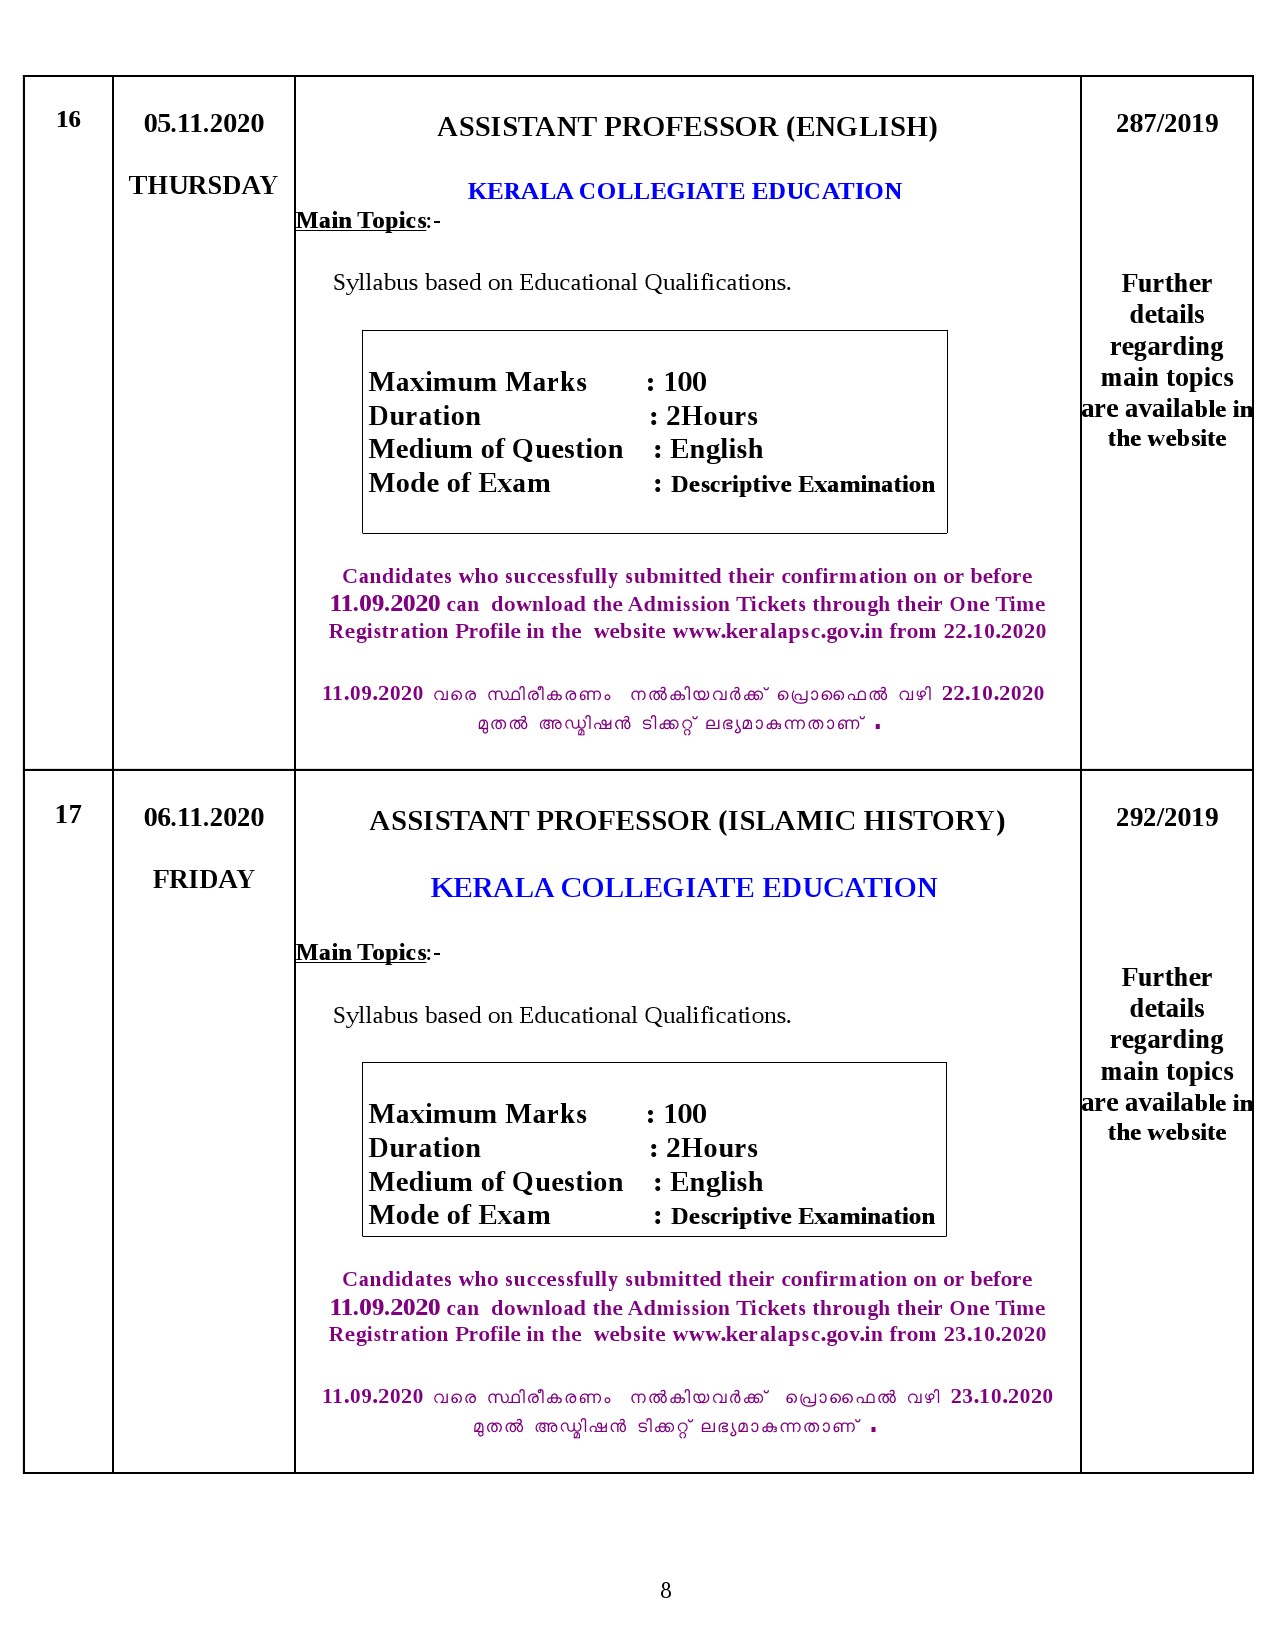 Kerala PSC Final Exam Schedule for November 2020 - Notification Image 8